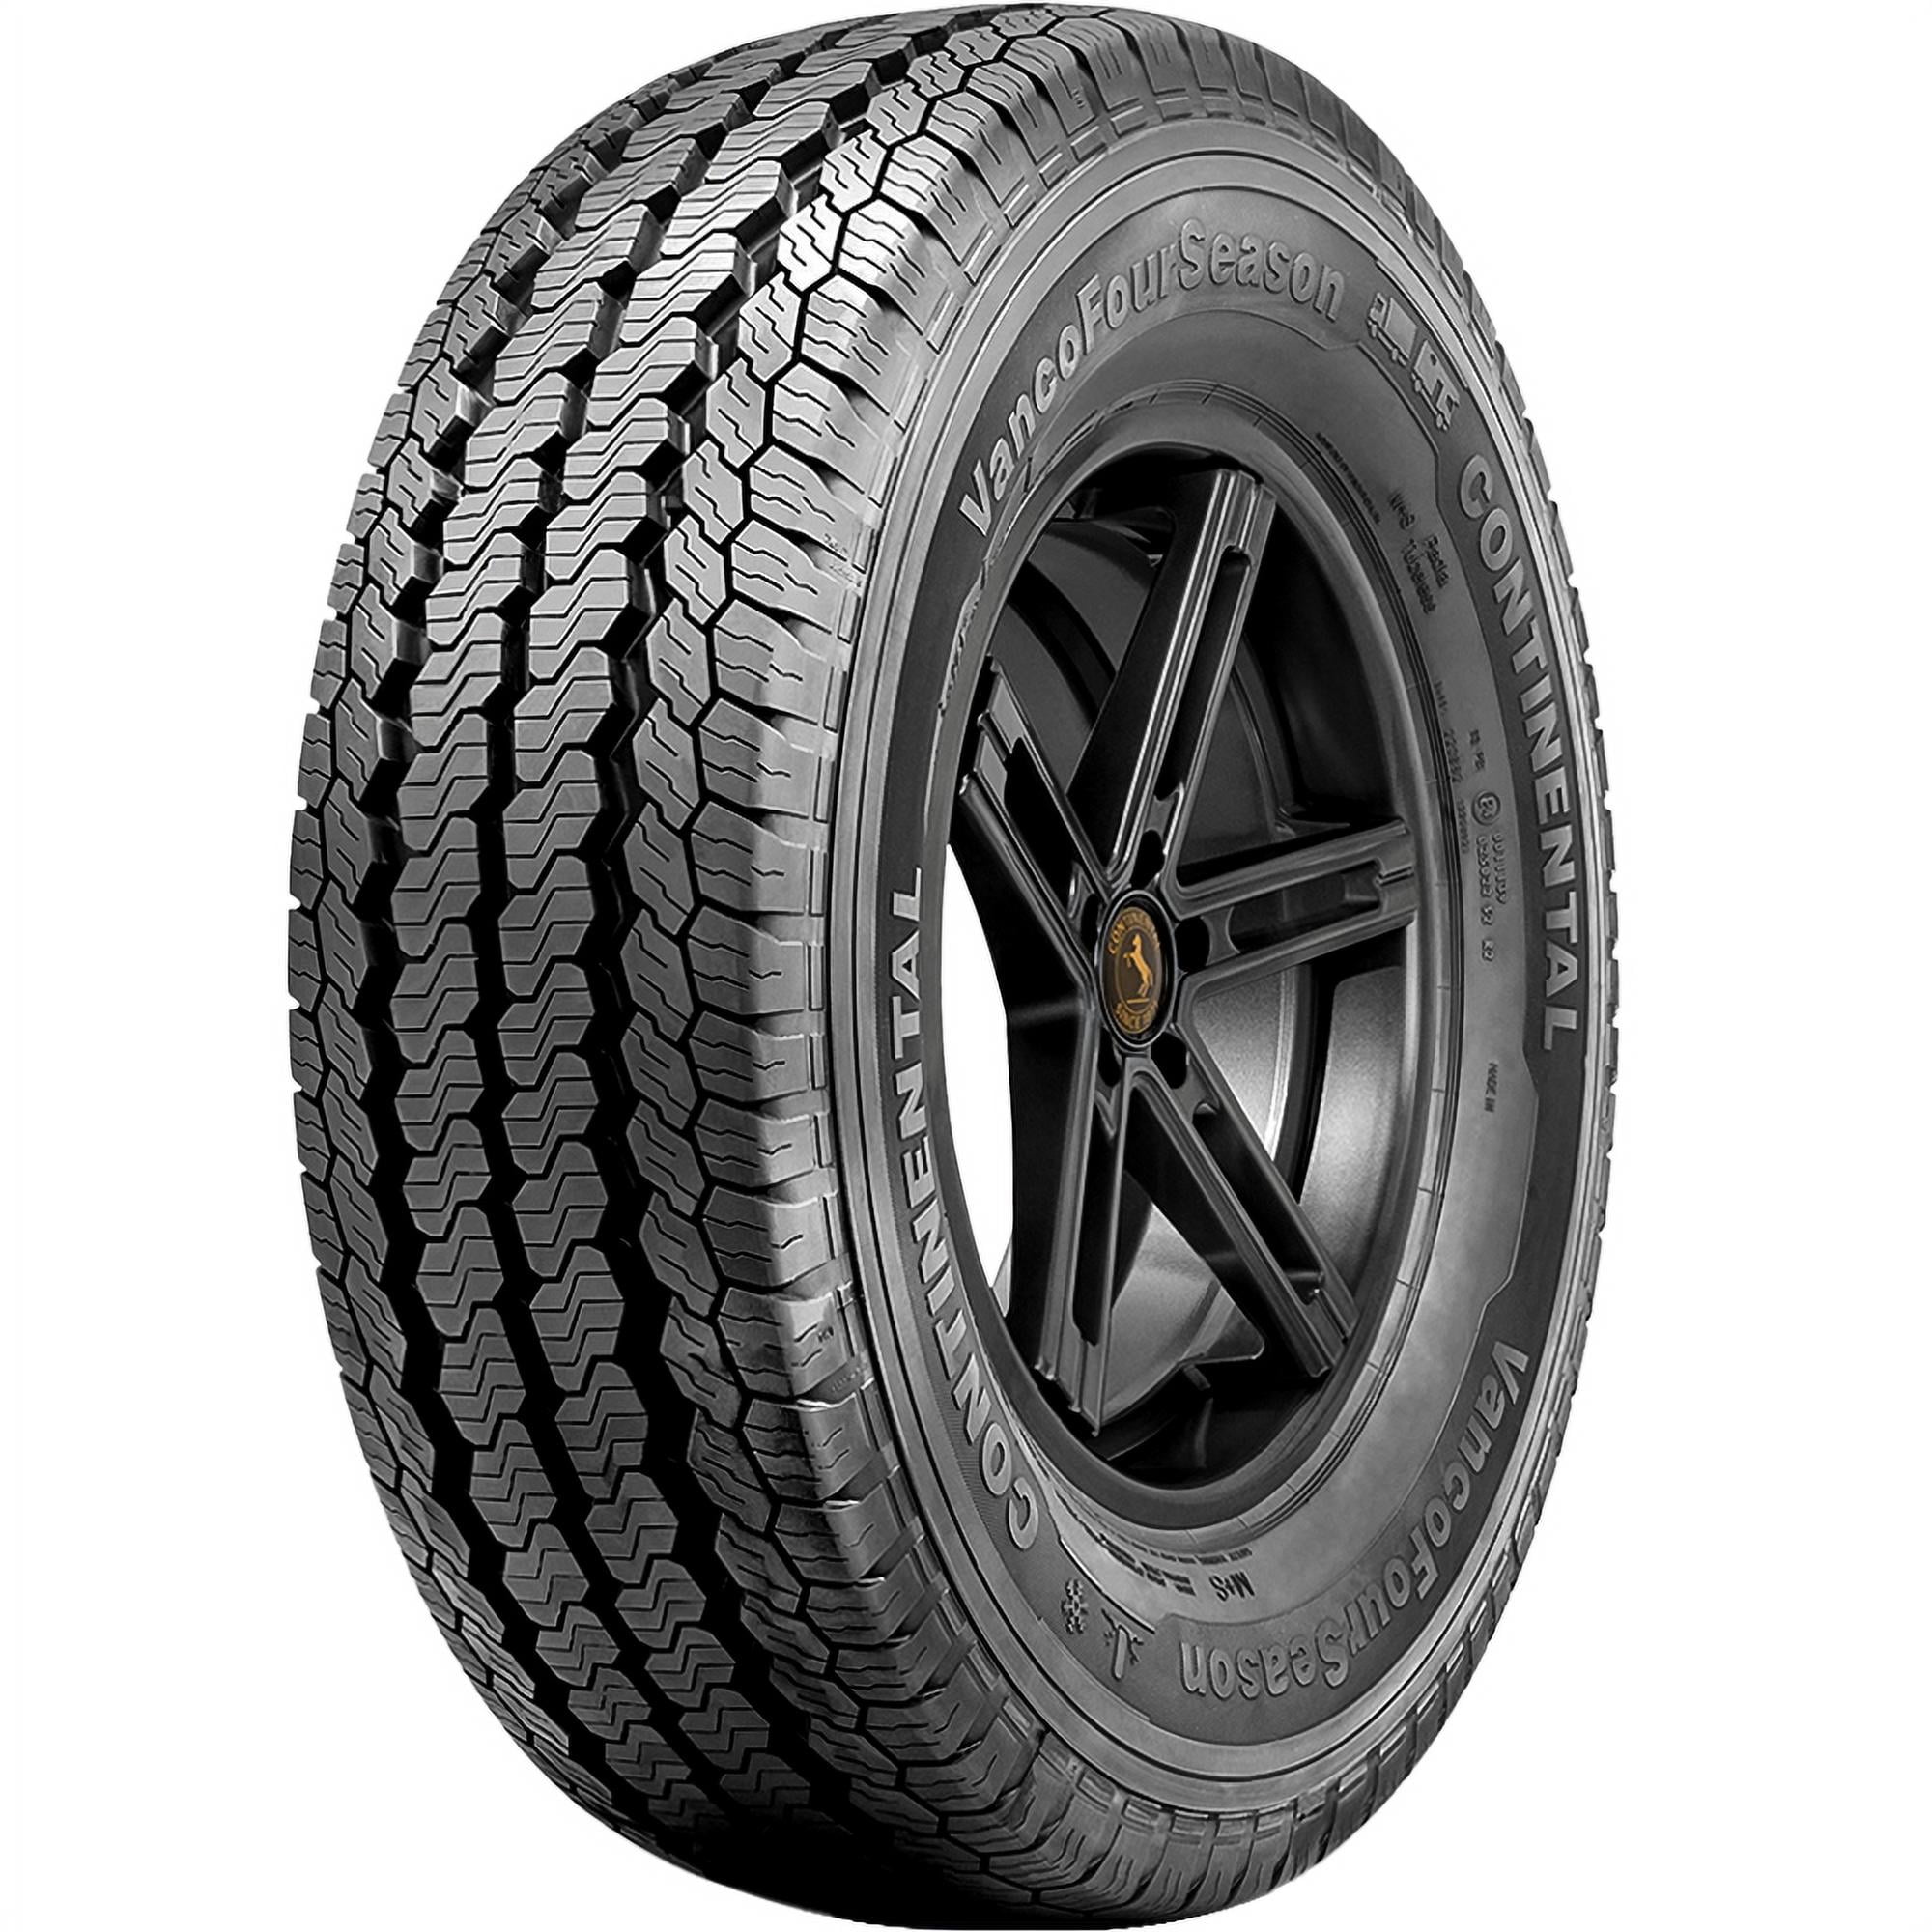 185/60R15C/6 94/92T Grabber HD All Season Radial Tire 